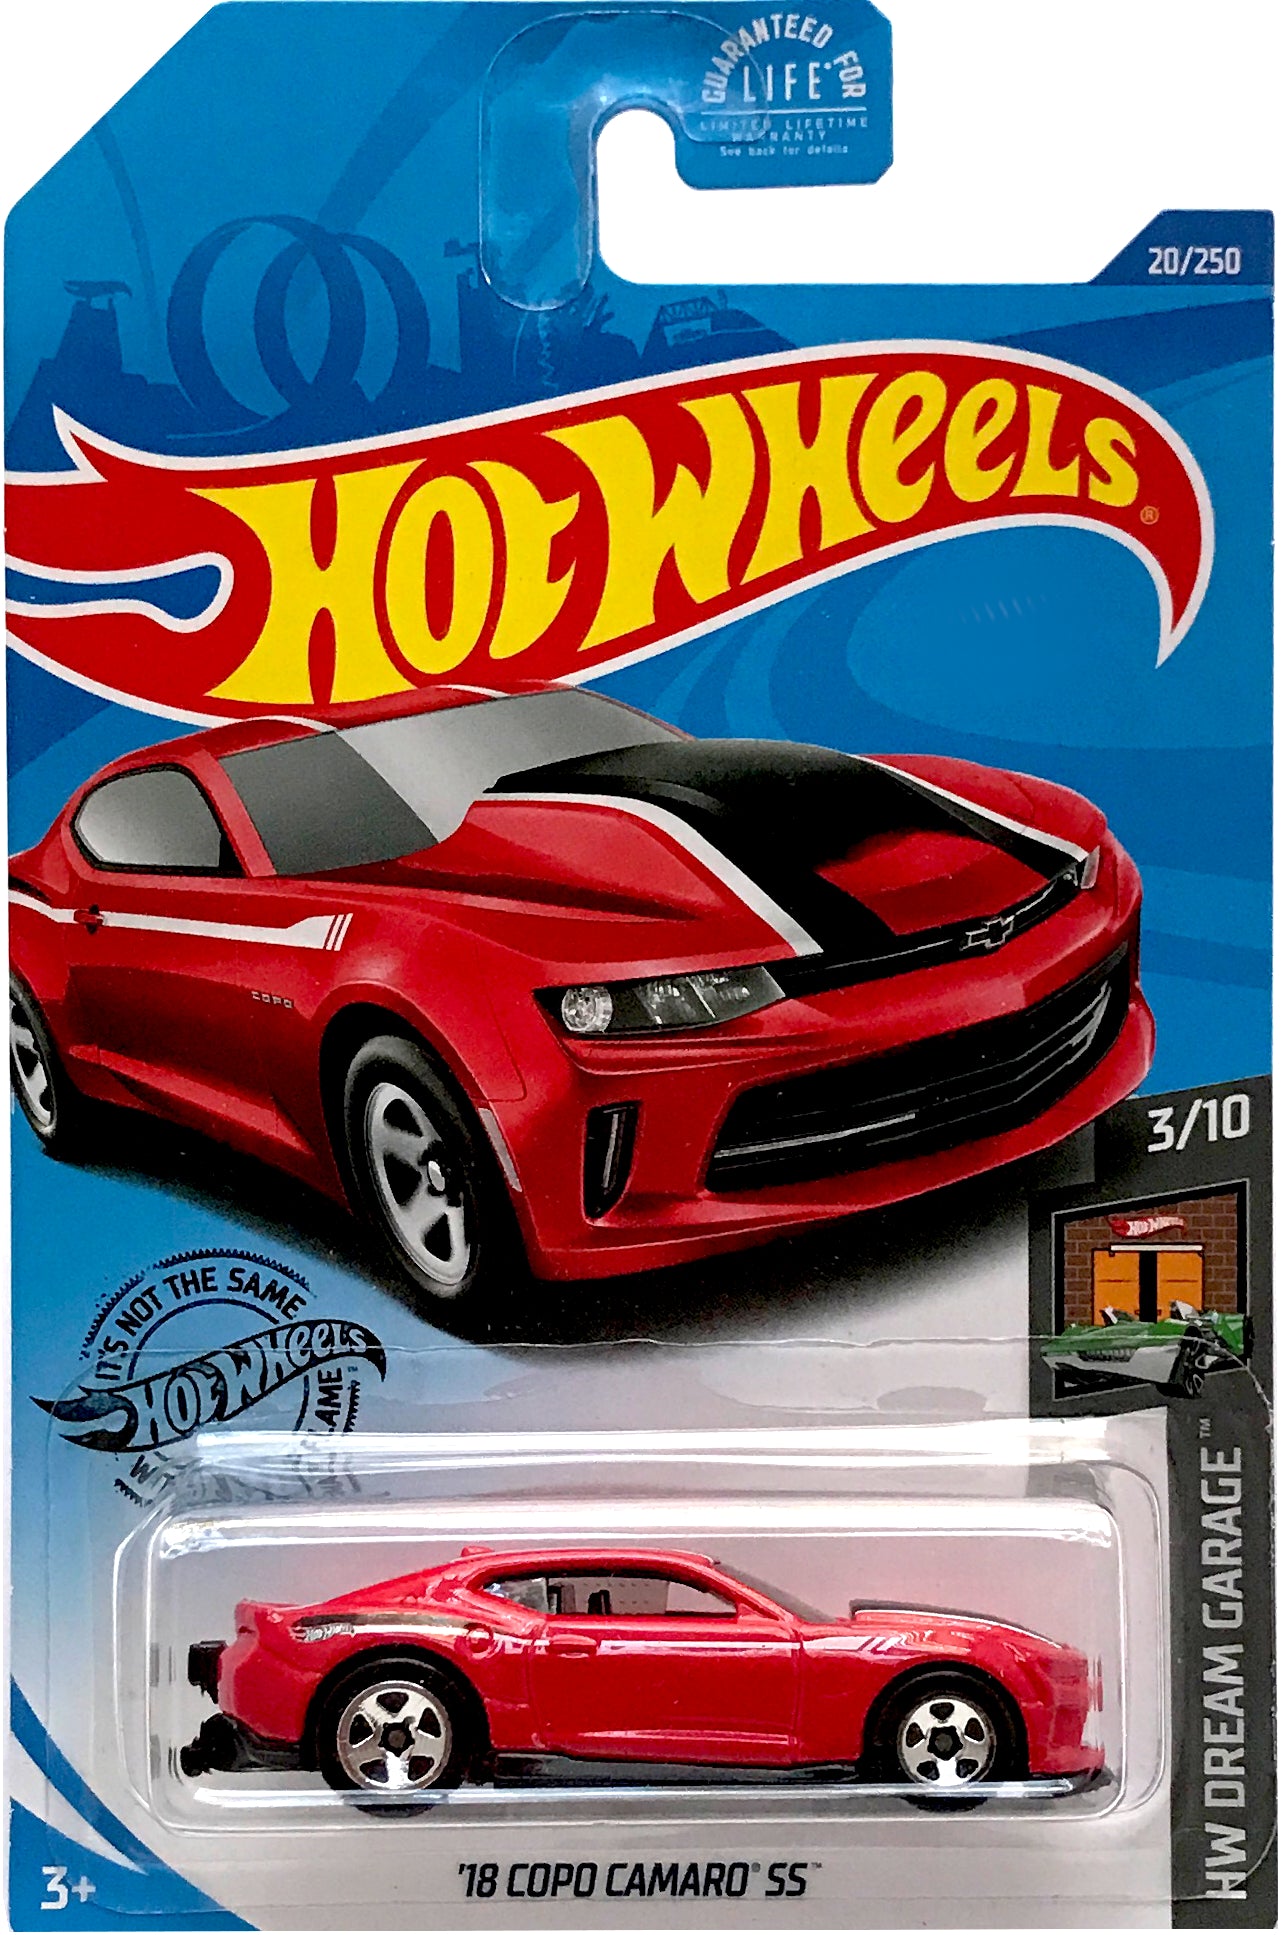 2020 Hot Wheels Mainline #020 - '18 COPO Camaro SS (Red) GHG54